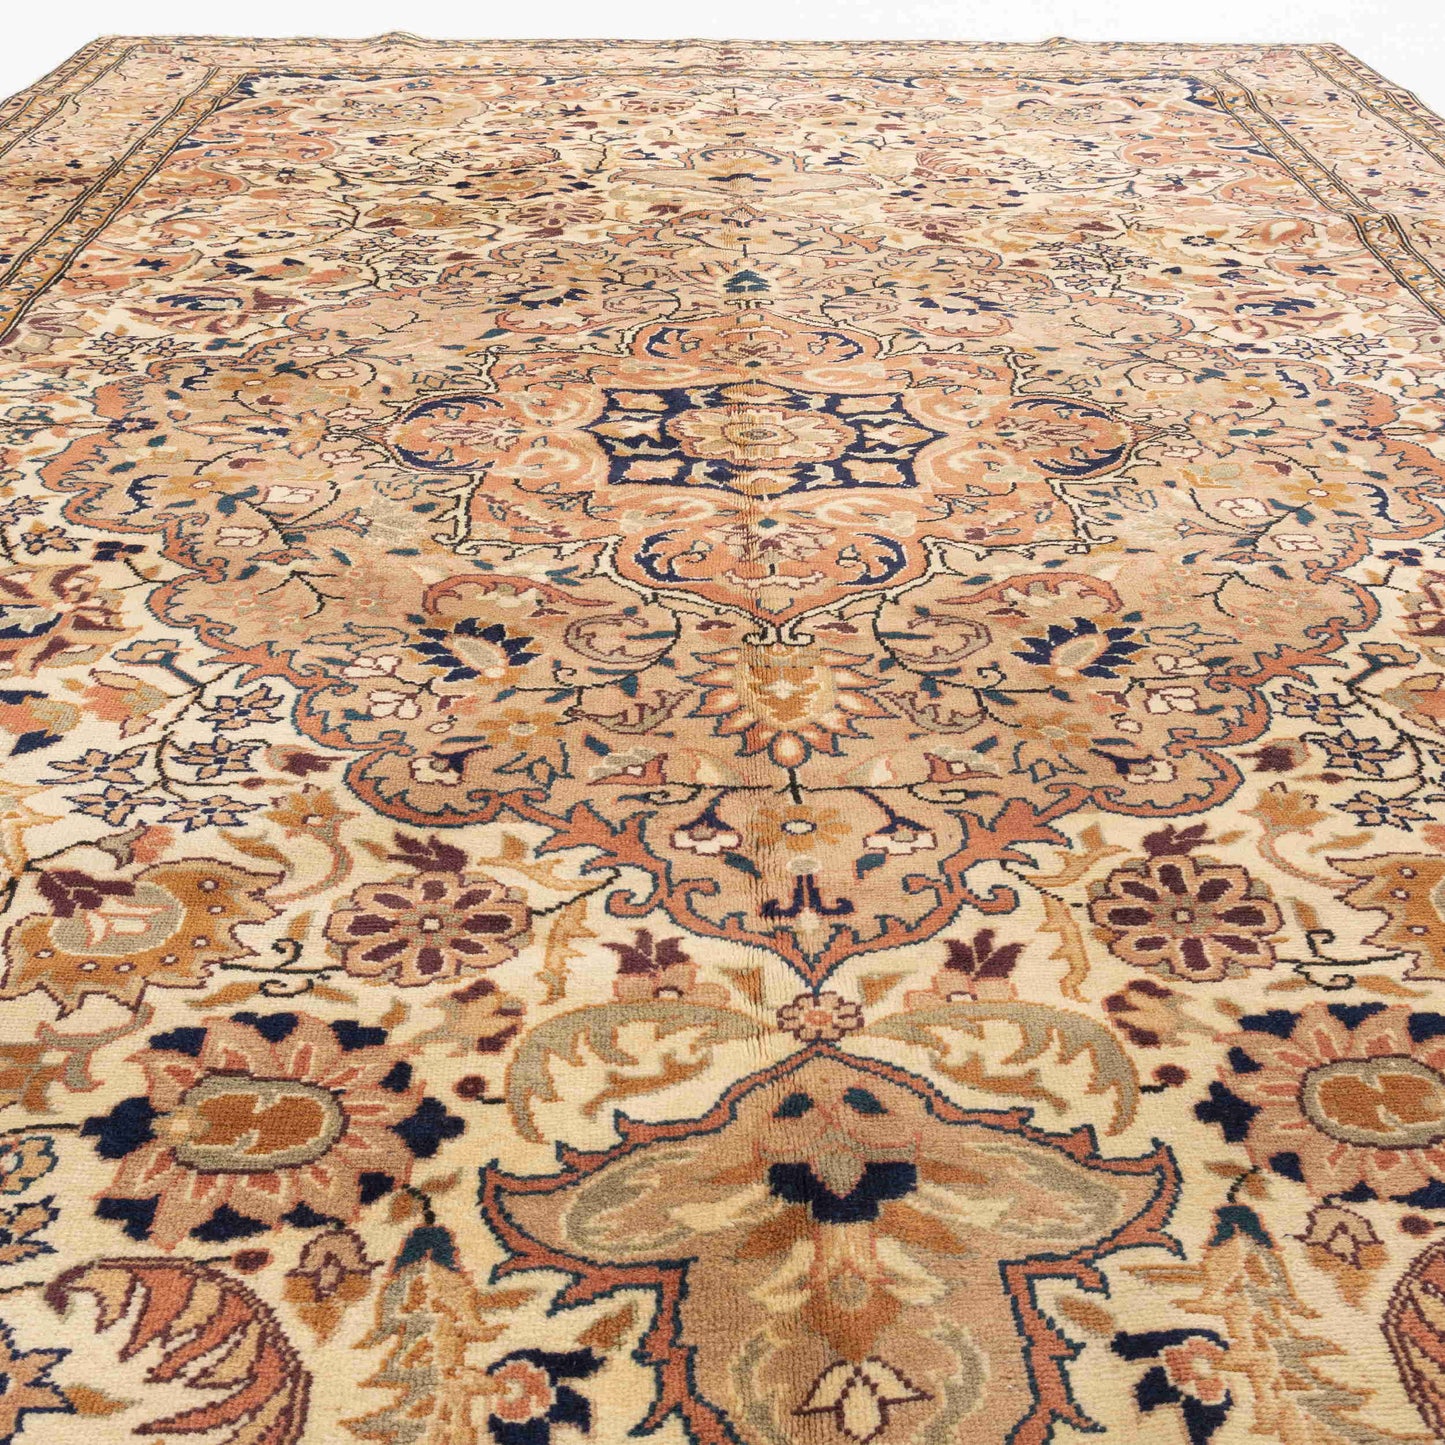 Oriental Rug Anatolian Handmade Wool On Cotton 201 X 296 Cm - 6' 8'' X 9' 9'' Stone C009 ER23